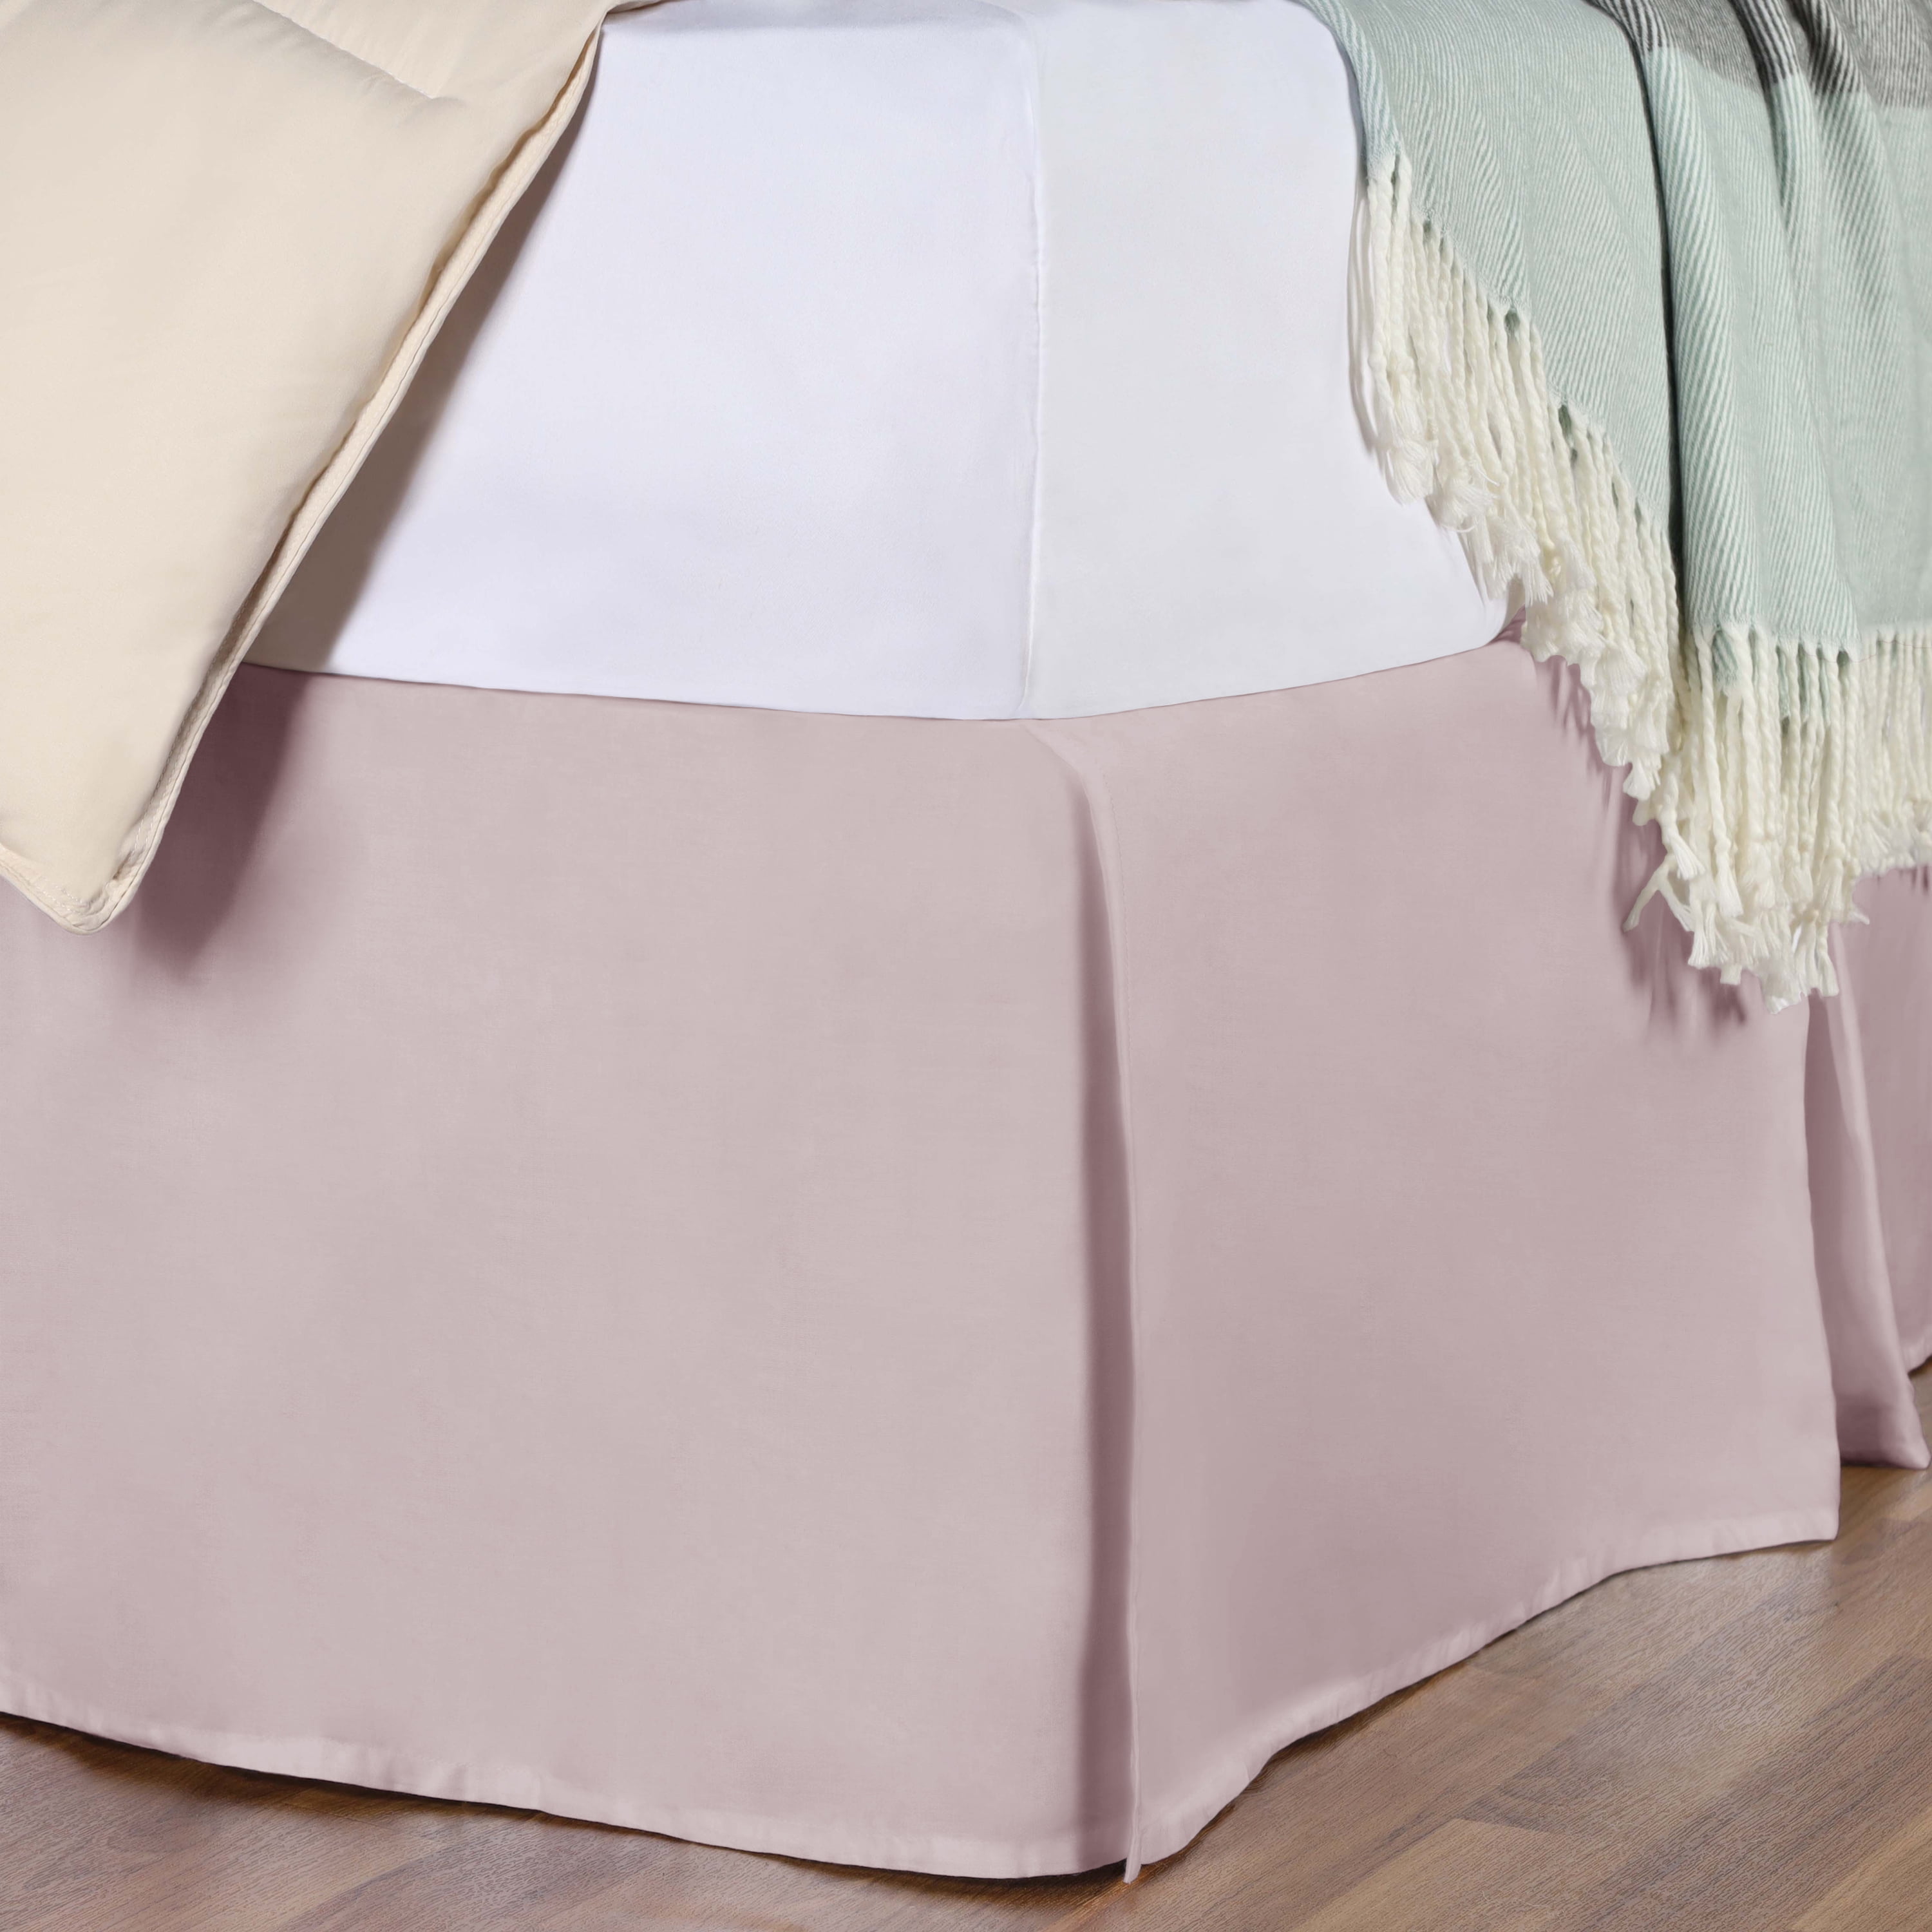 Wrap Around Three Sides Elastic Plain Ruffle Bed Skirt Cotton 1000 TC Lilac 